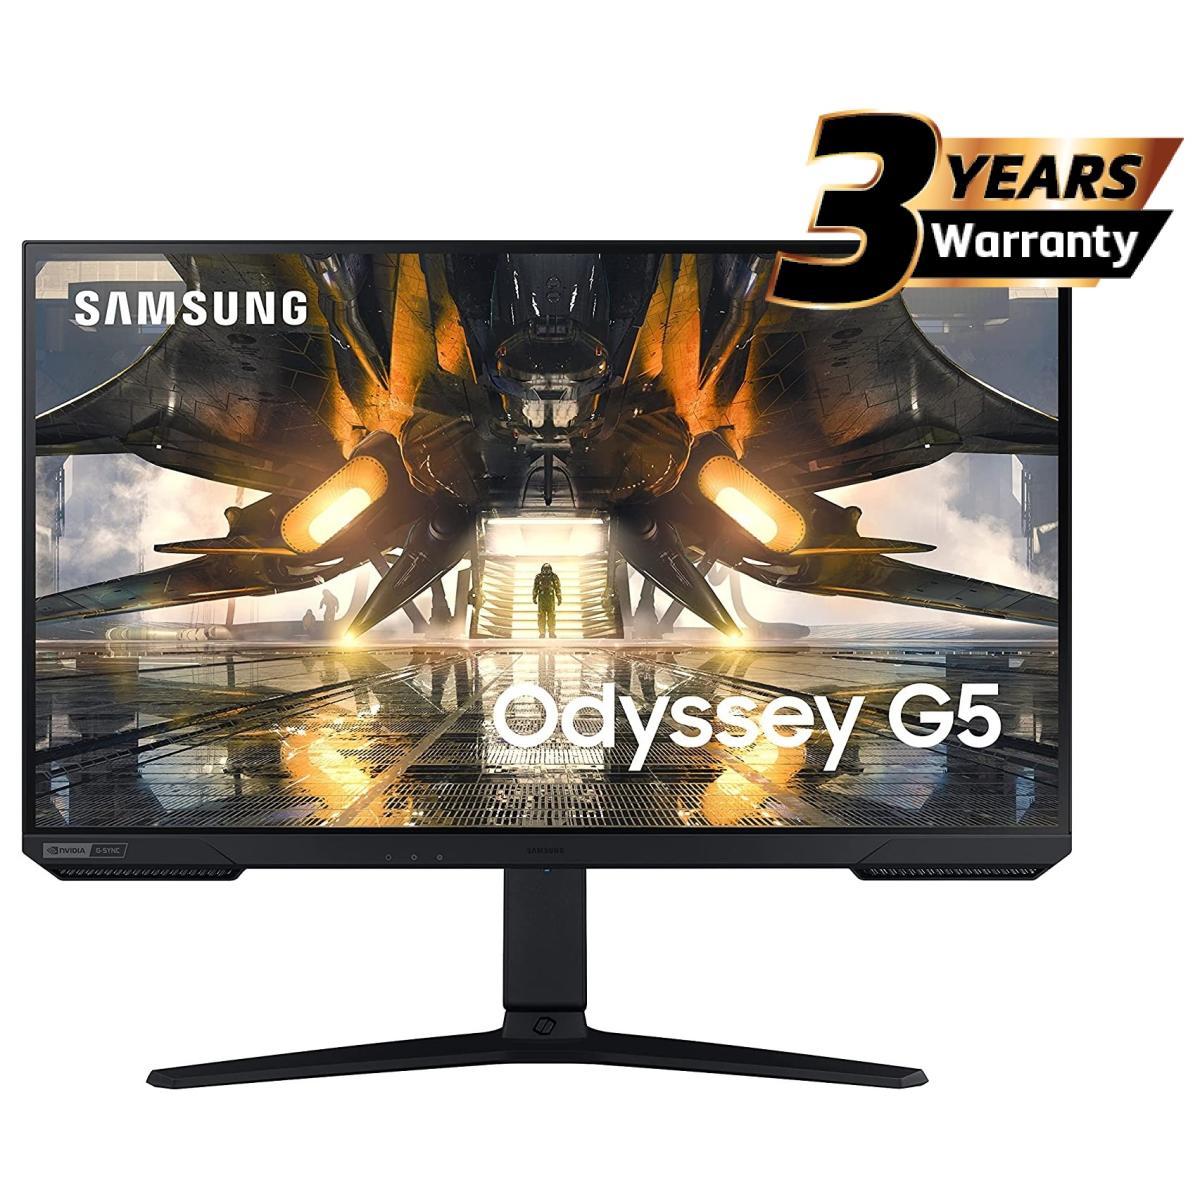 Samsung Odyssey G5 32" Flat Monitor IPS 2K (2560 x 1440) 165Hz 1ms(GTG), HDR10, 99% sRGB, 10Bit, G-Sync Compatible w/ Ergonomic Stand